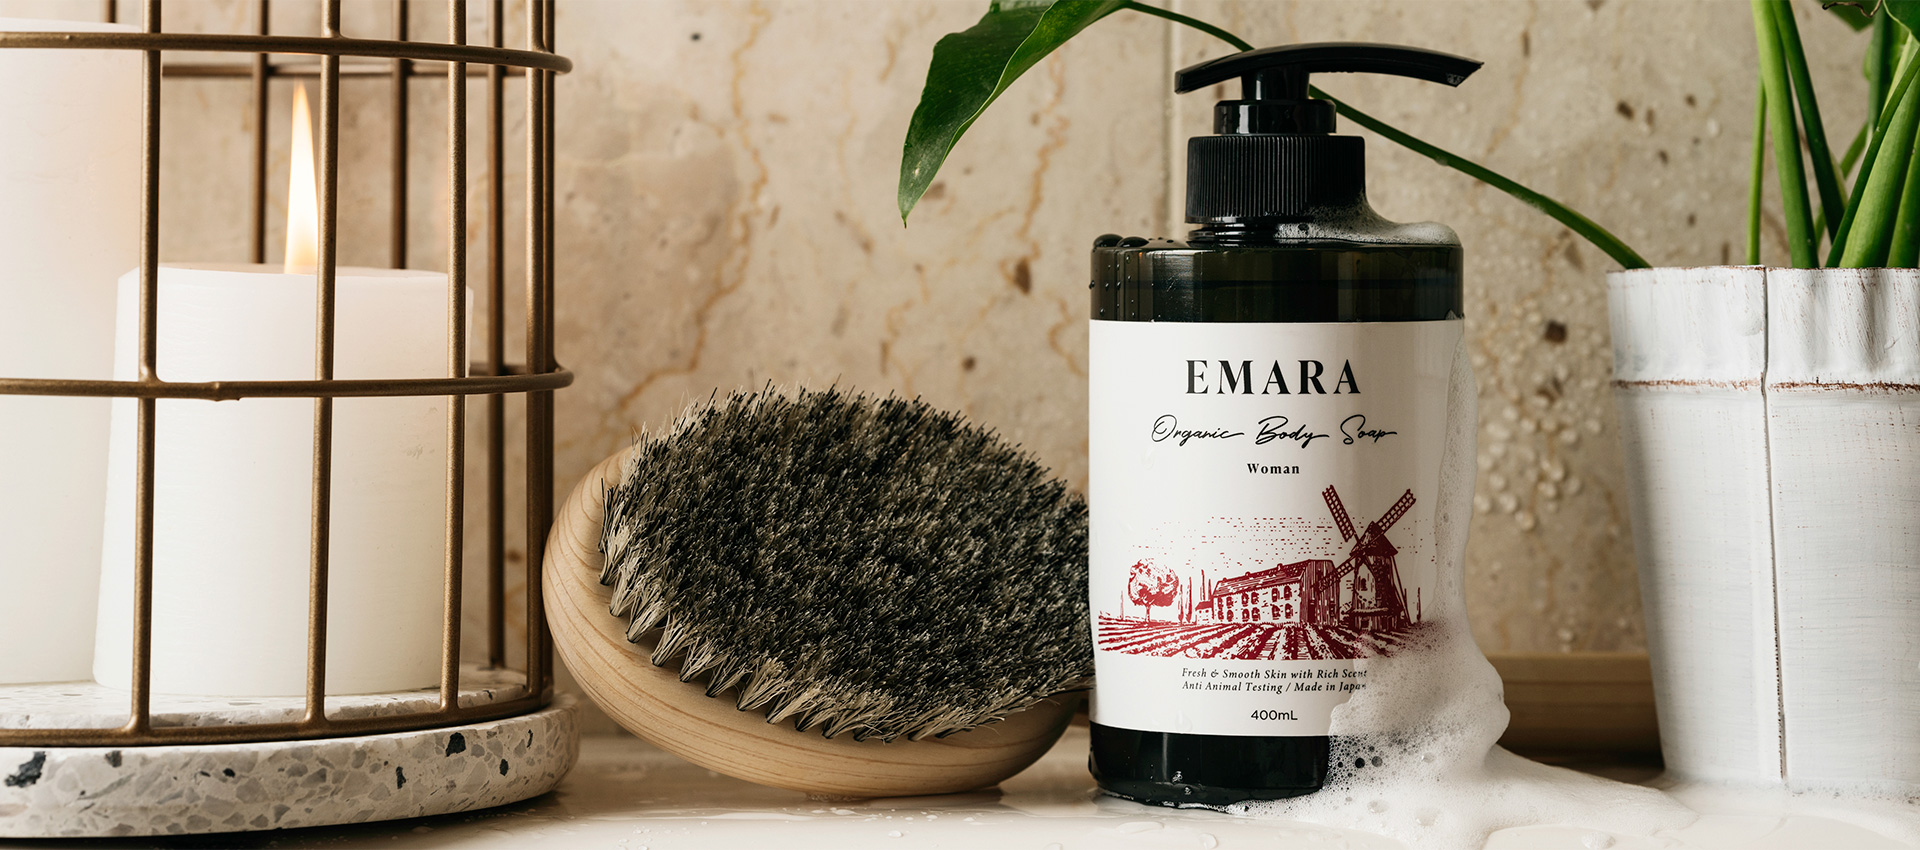 EMARA Body Soap for Woman